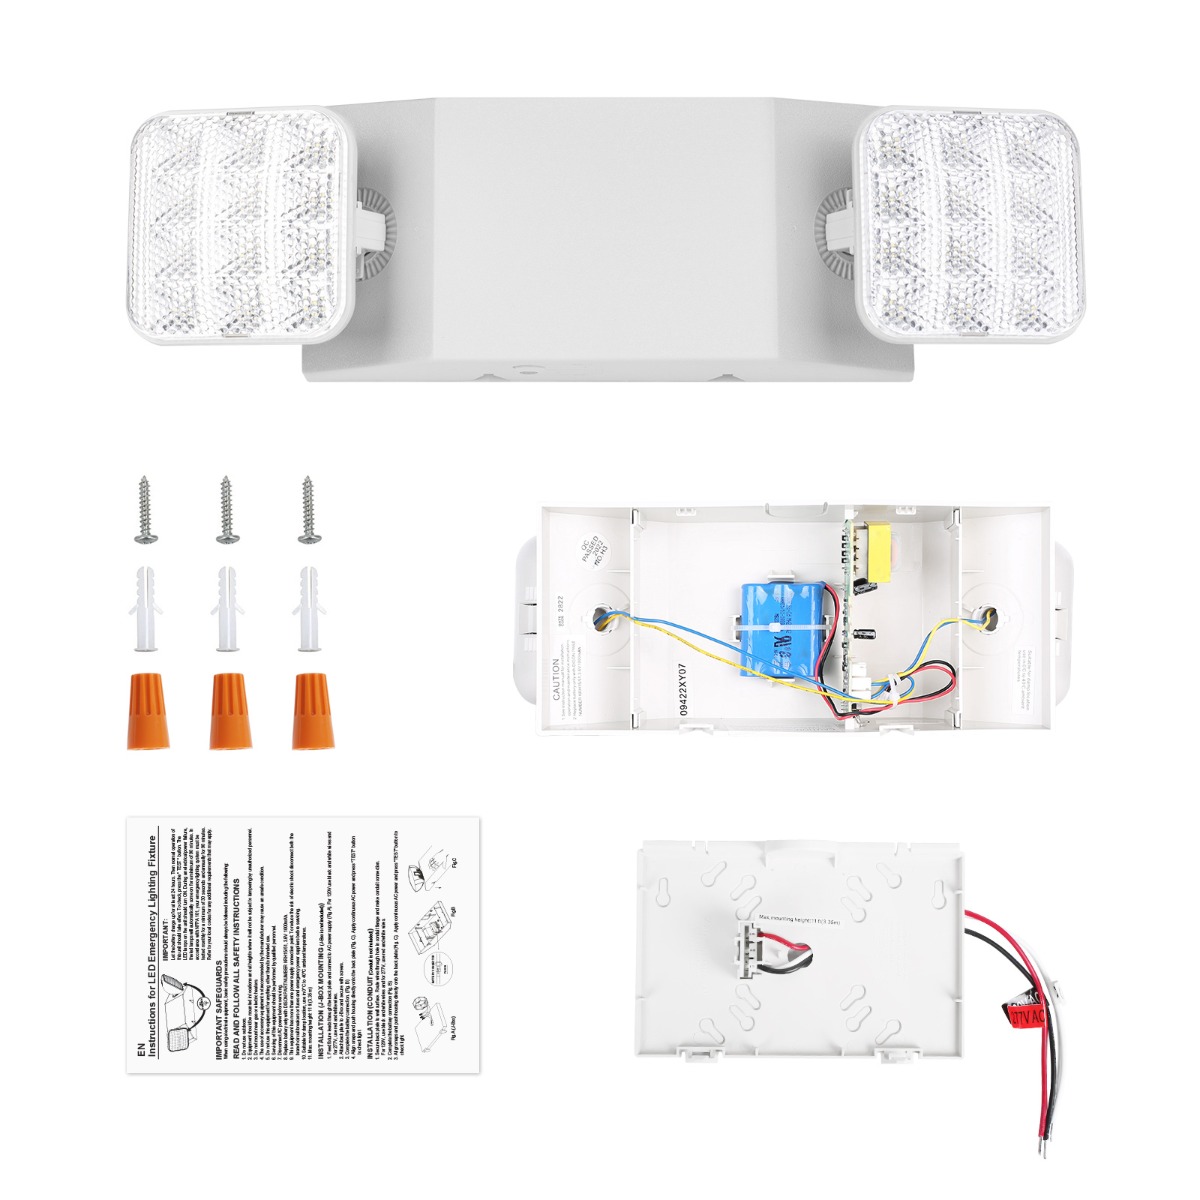 https://static.lepro.com/media/catalog/product/l/e/lepro-led-emergency-light-accessories.jpg